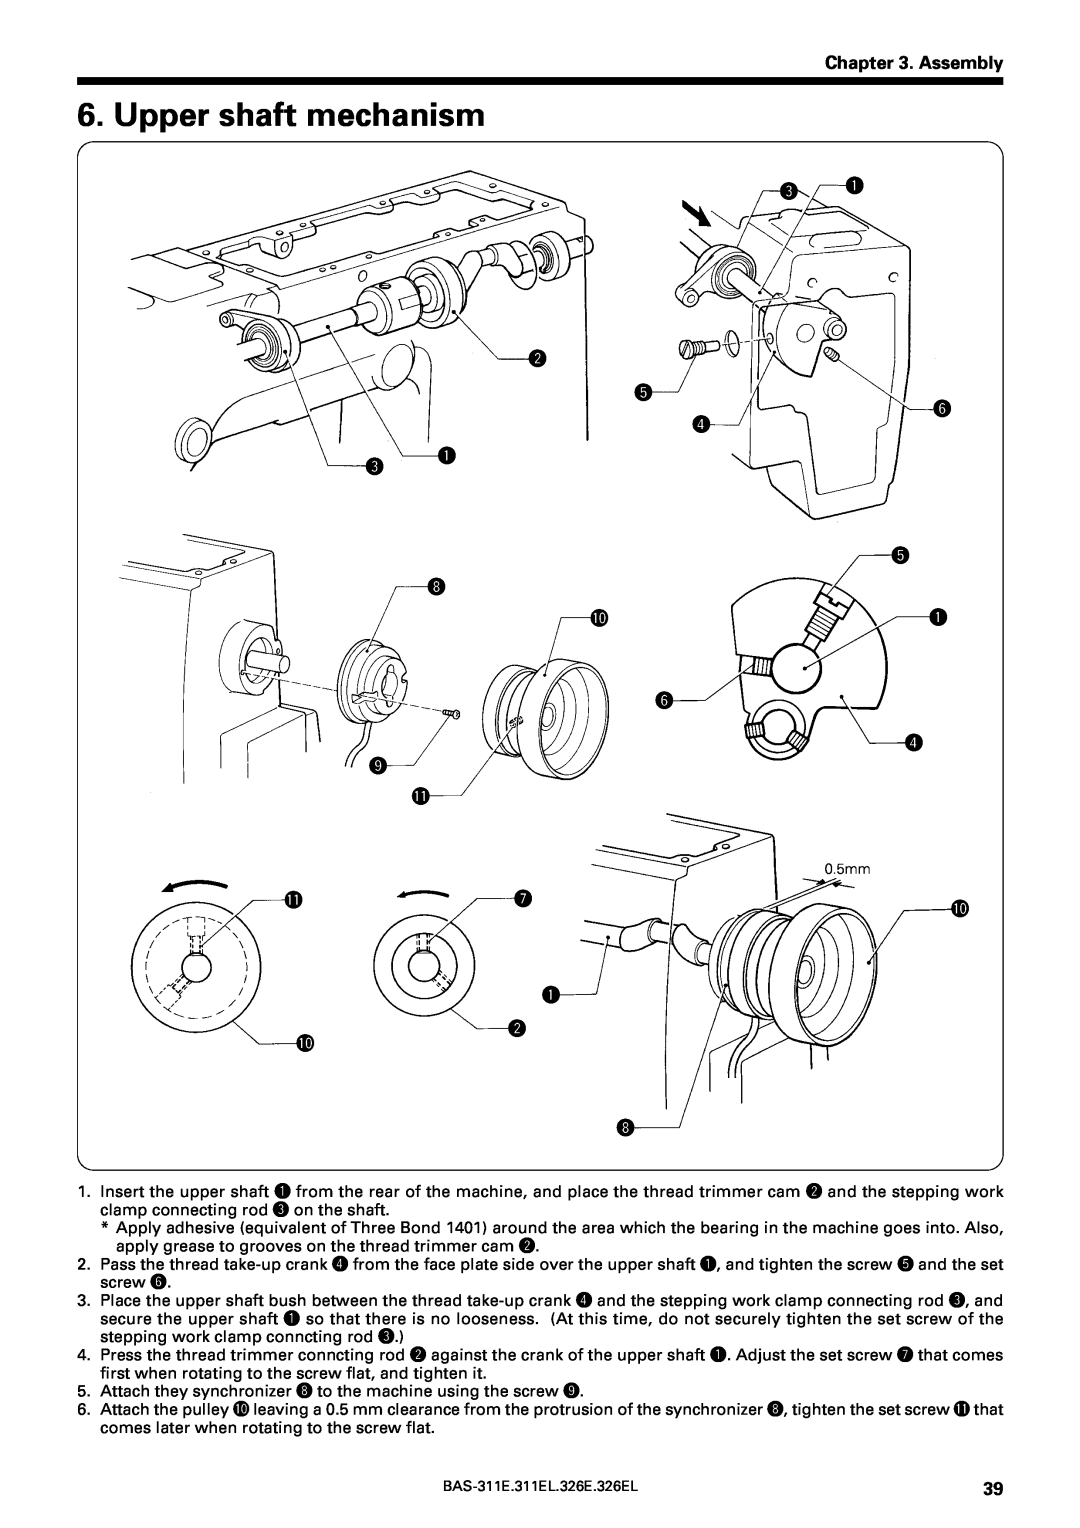 Brother BAS-311E service manual Upper shaft mechanism, Assembly, e q w t y r e q, q w i 